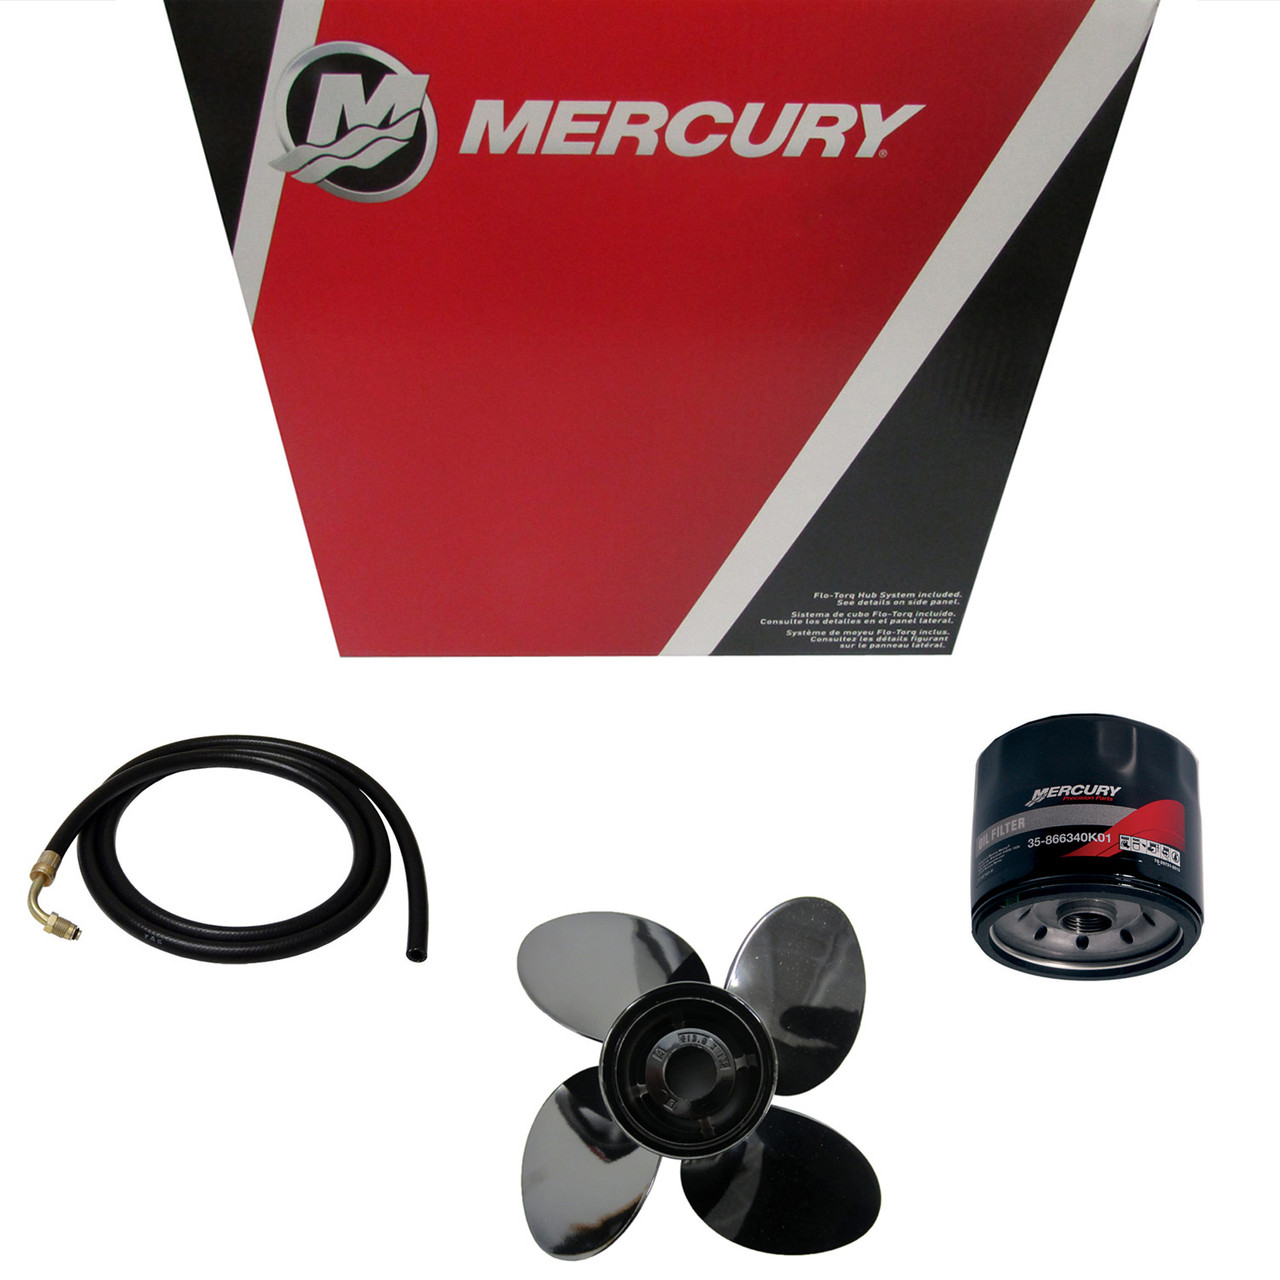 Mercury Marine / Mercruiser New OEM Damaged Remote Control, 881170A15D